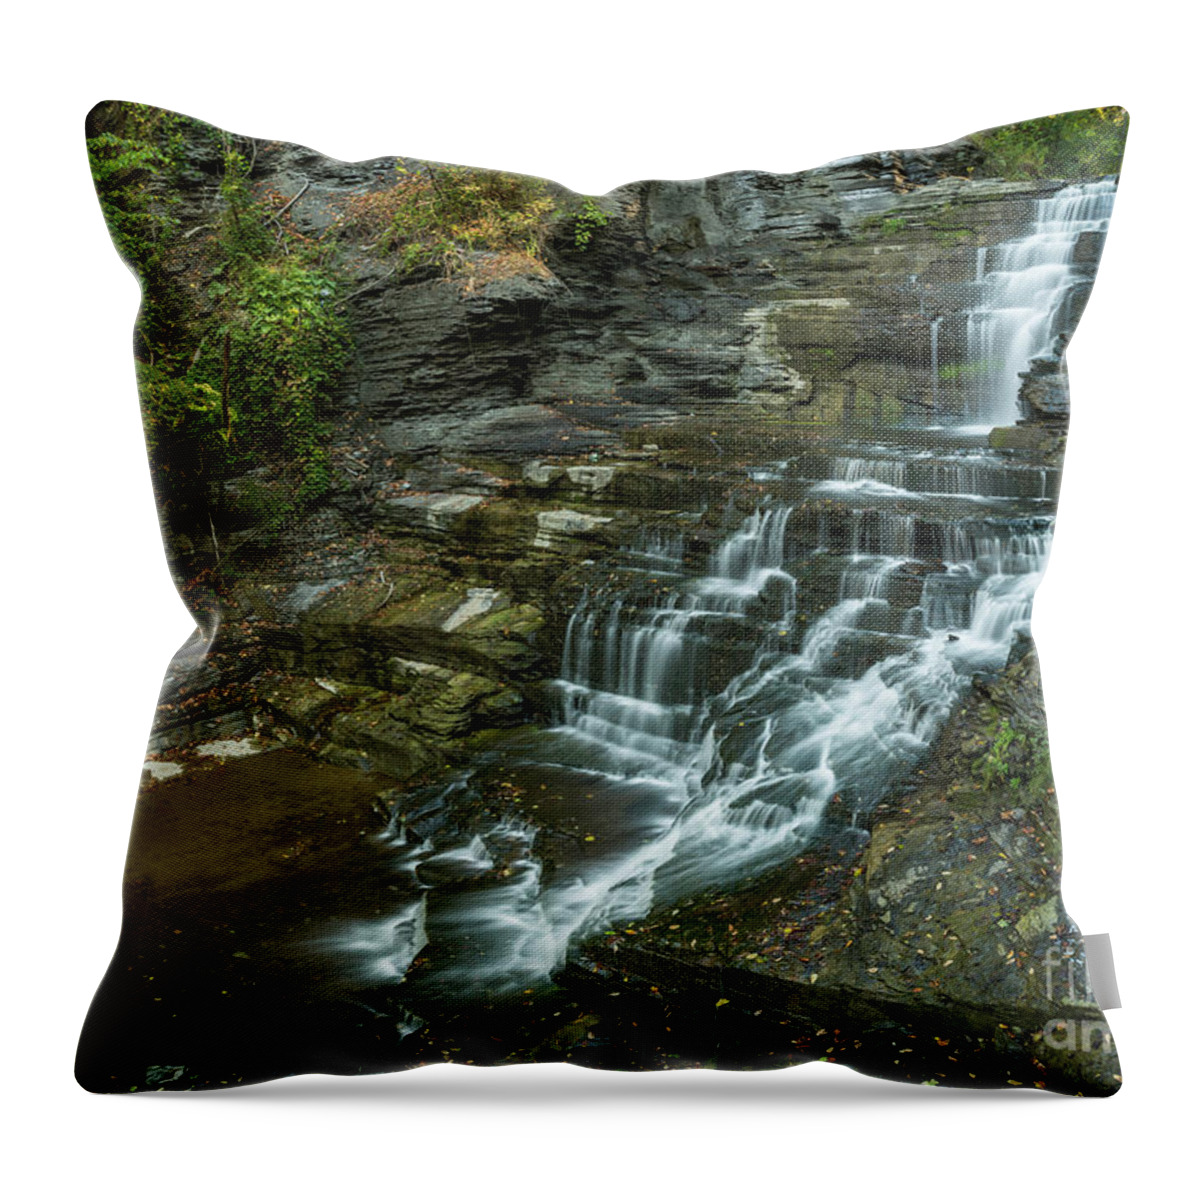 New York Throw Pillow featuring the photograph Falls Creek Gorge Trail by Karen Jorstad